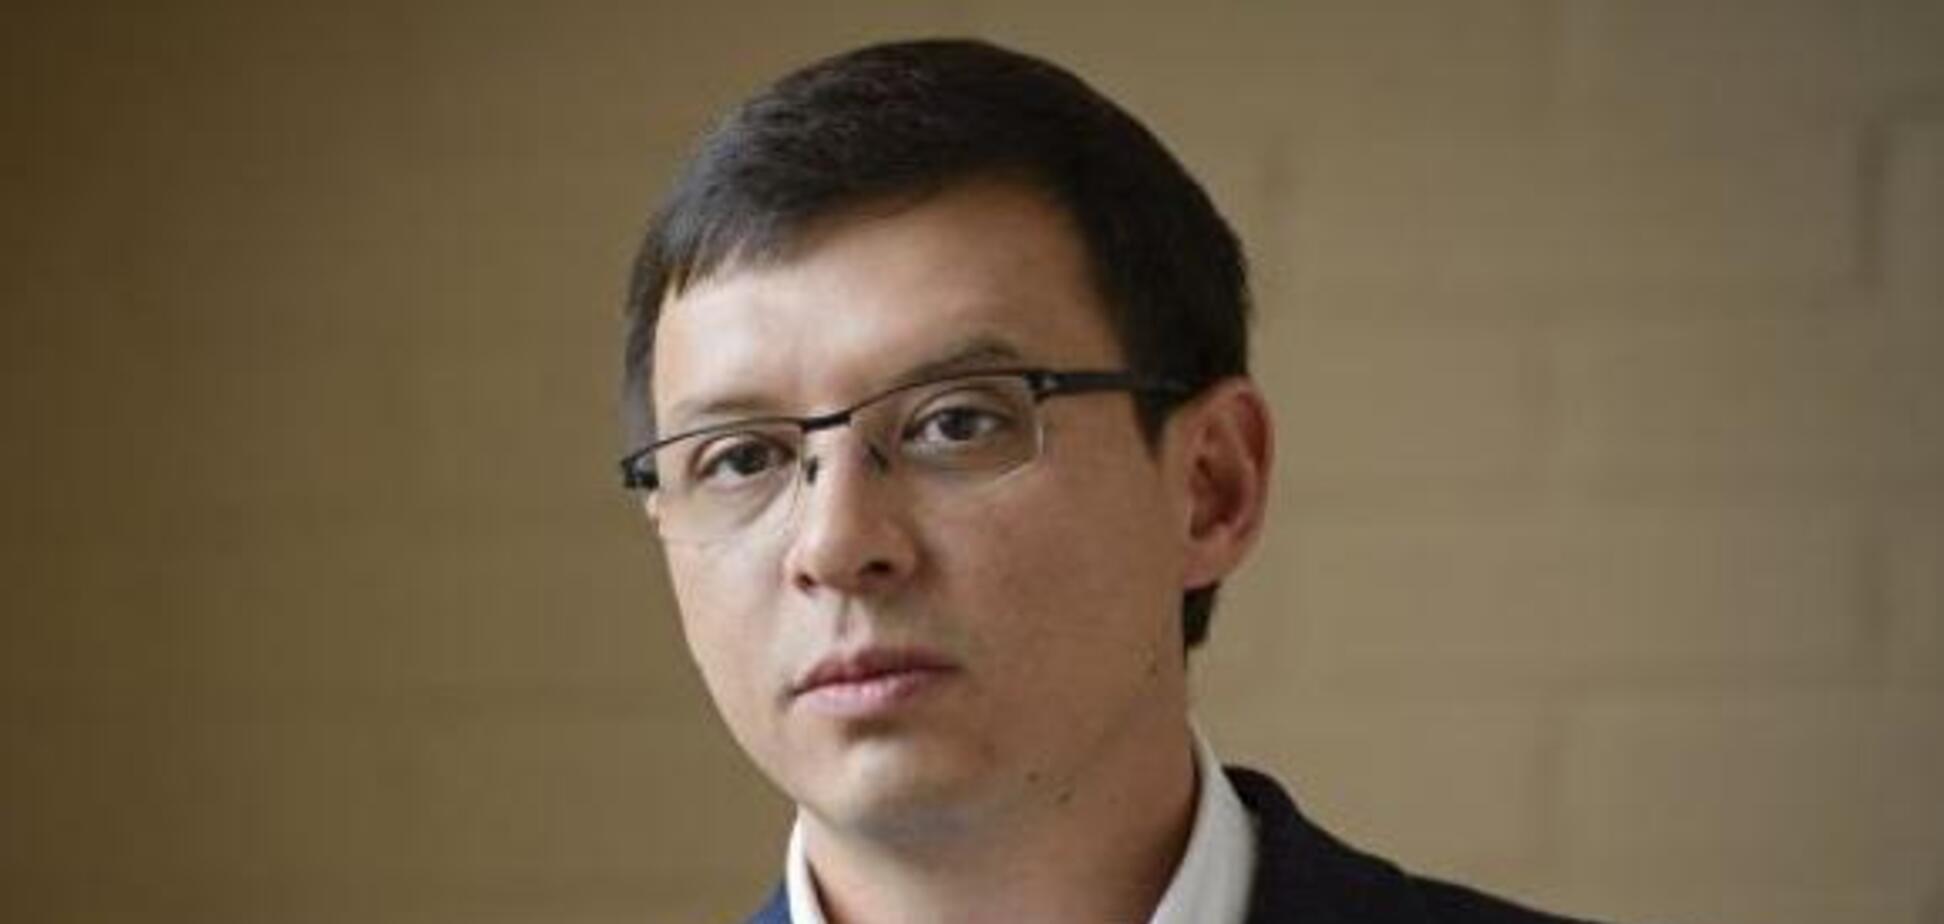 Евгений Мураев